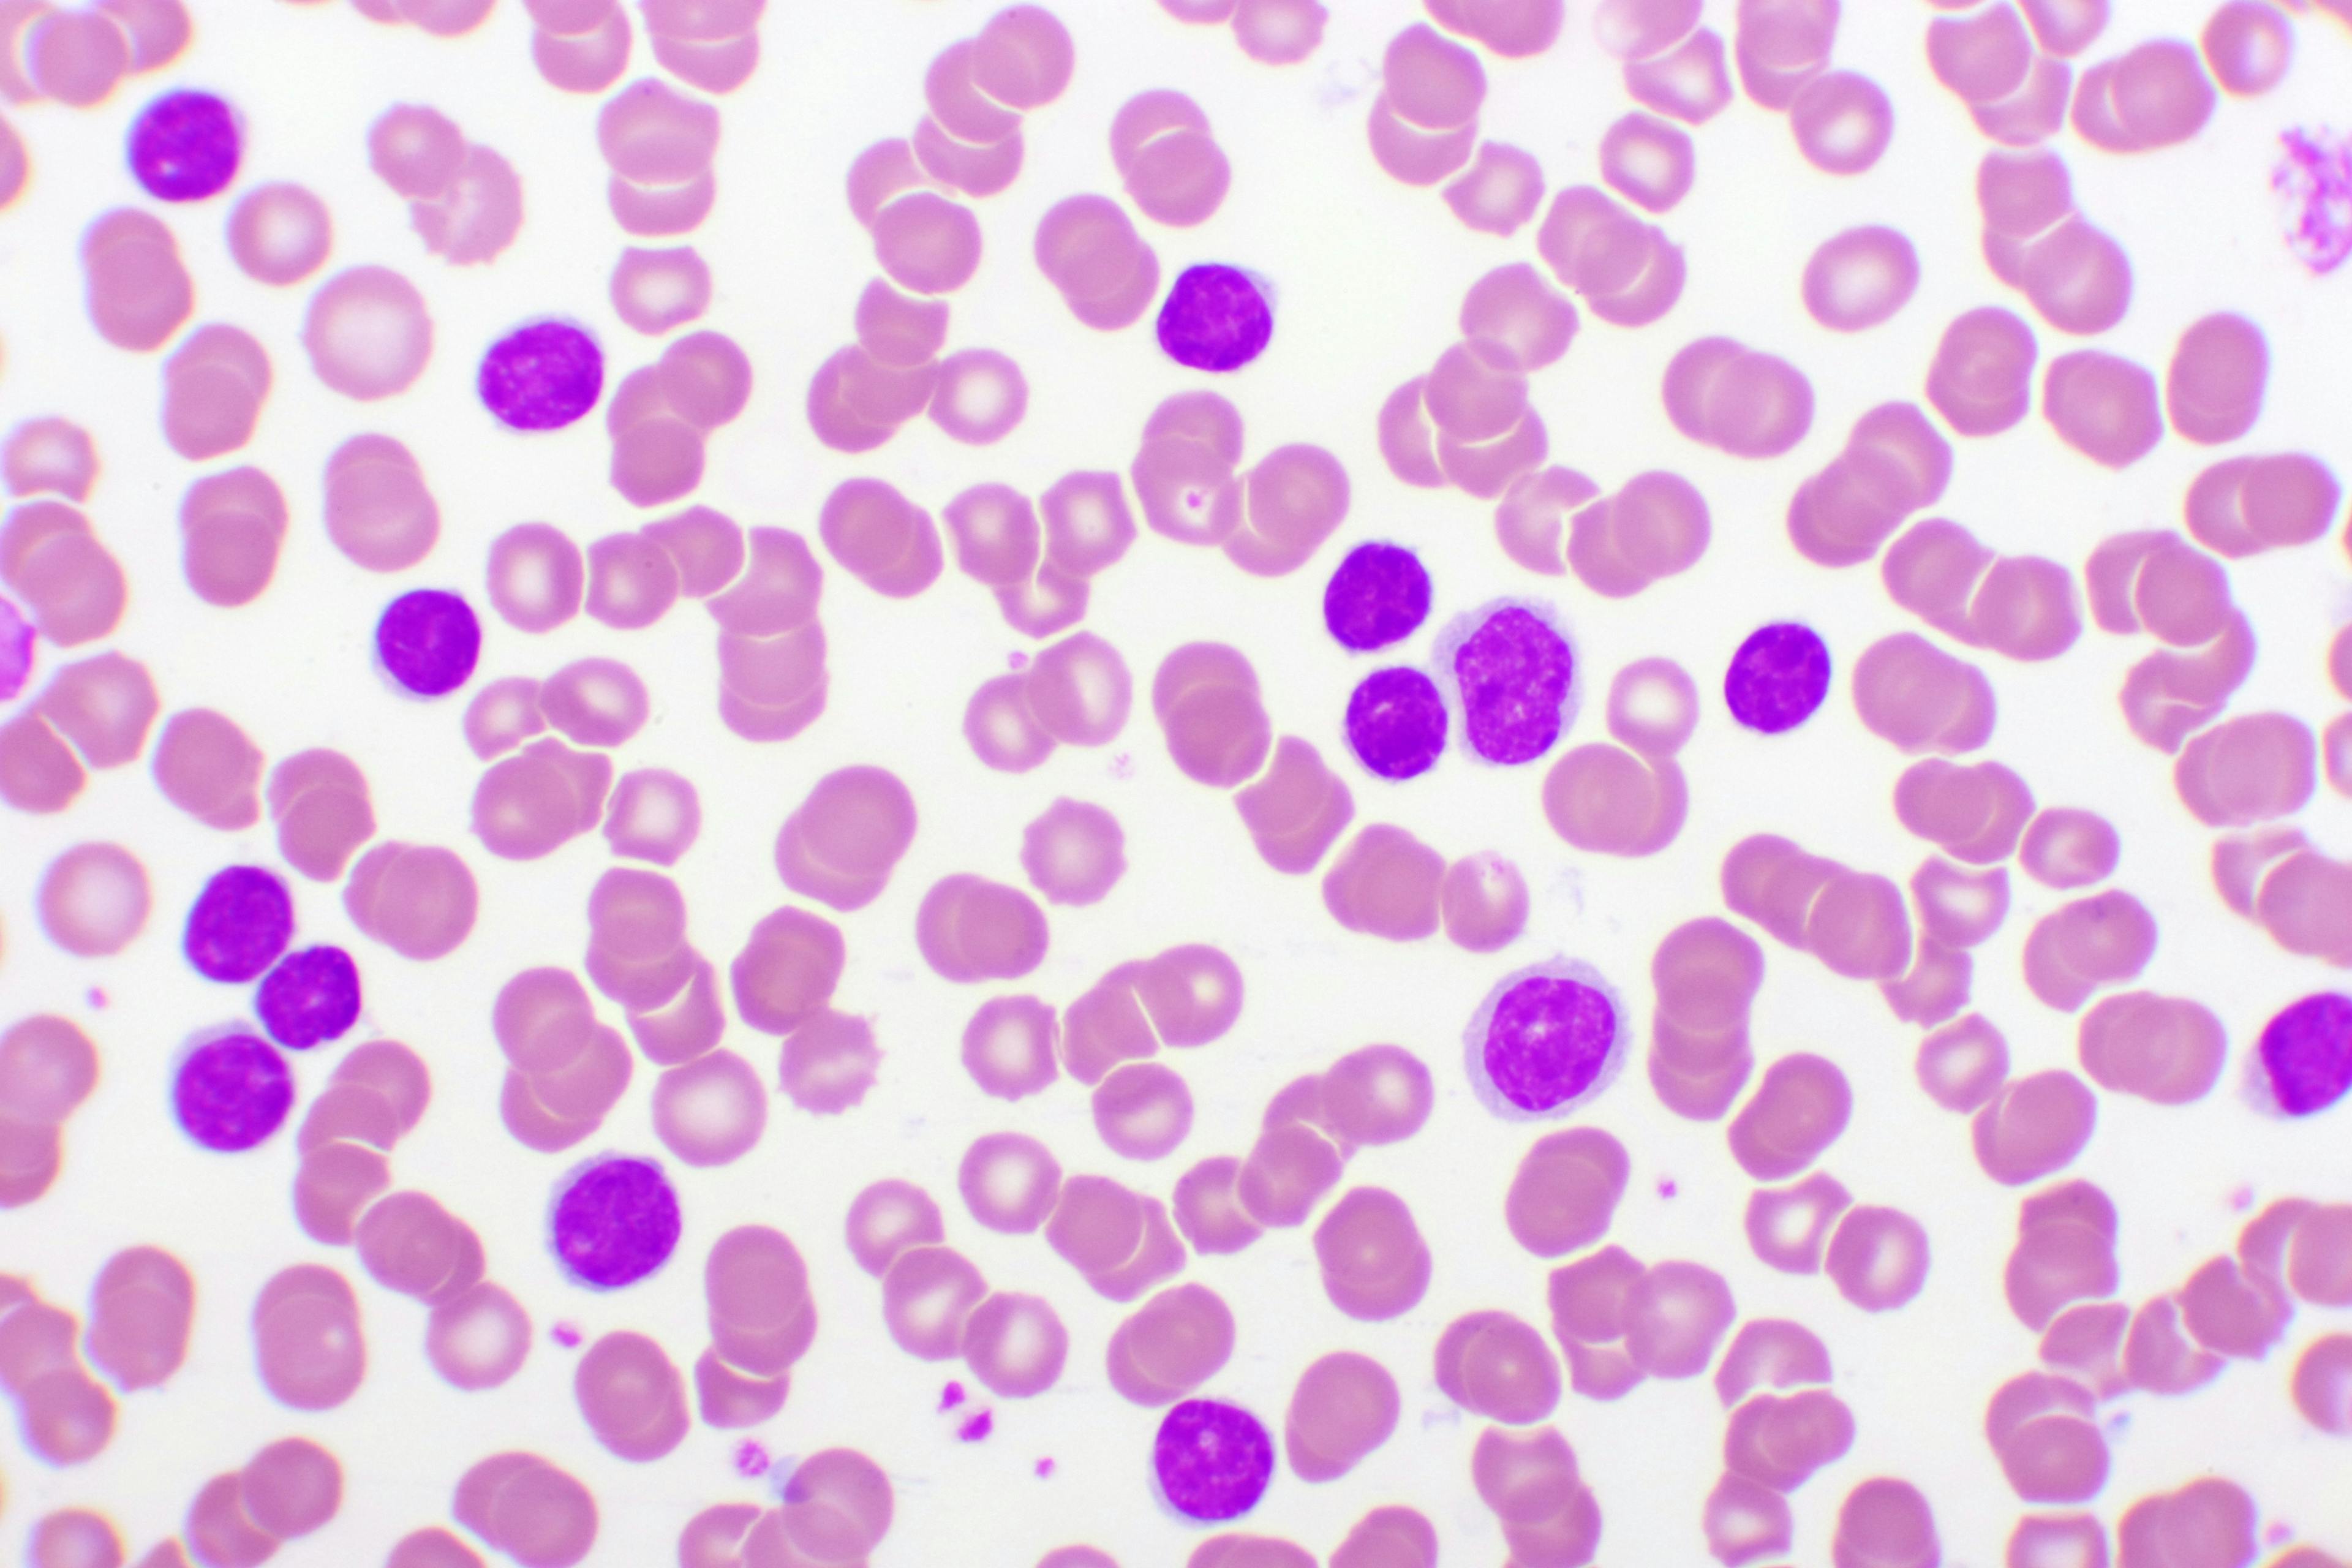 Chronic lymphocytic leukemia -- Image credit: jarun011 | stock.adobe.com